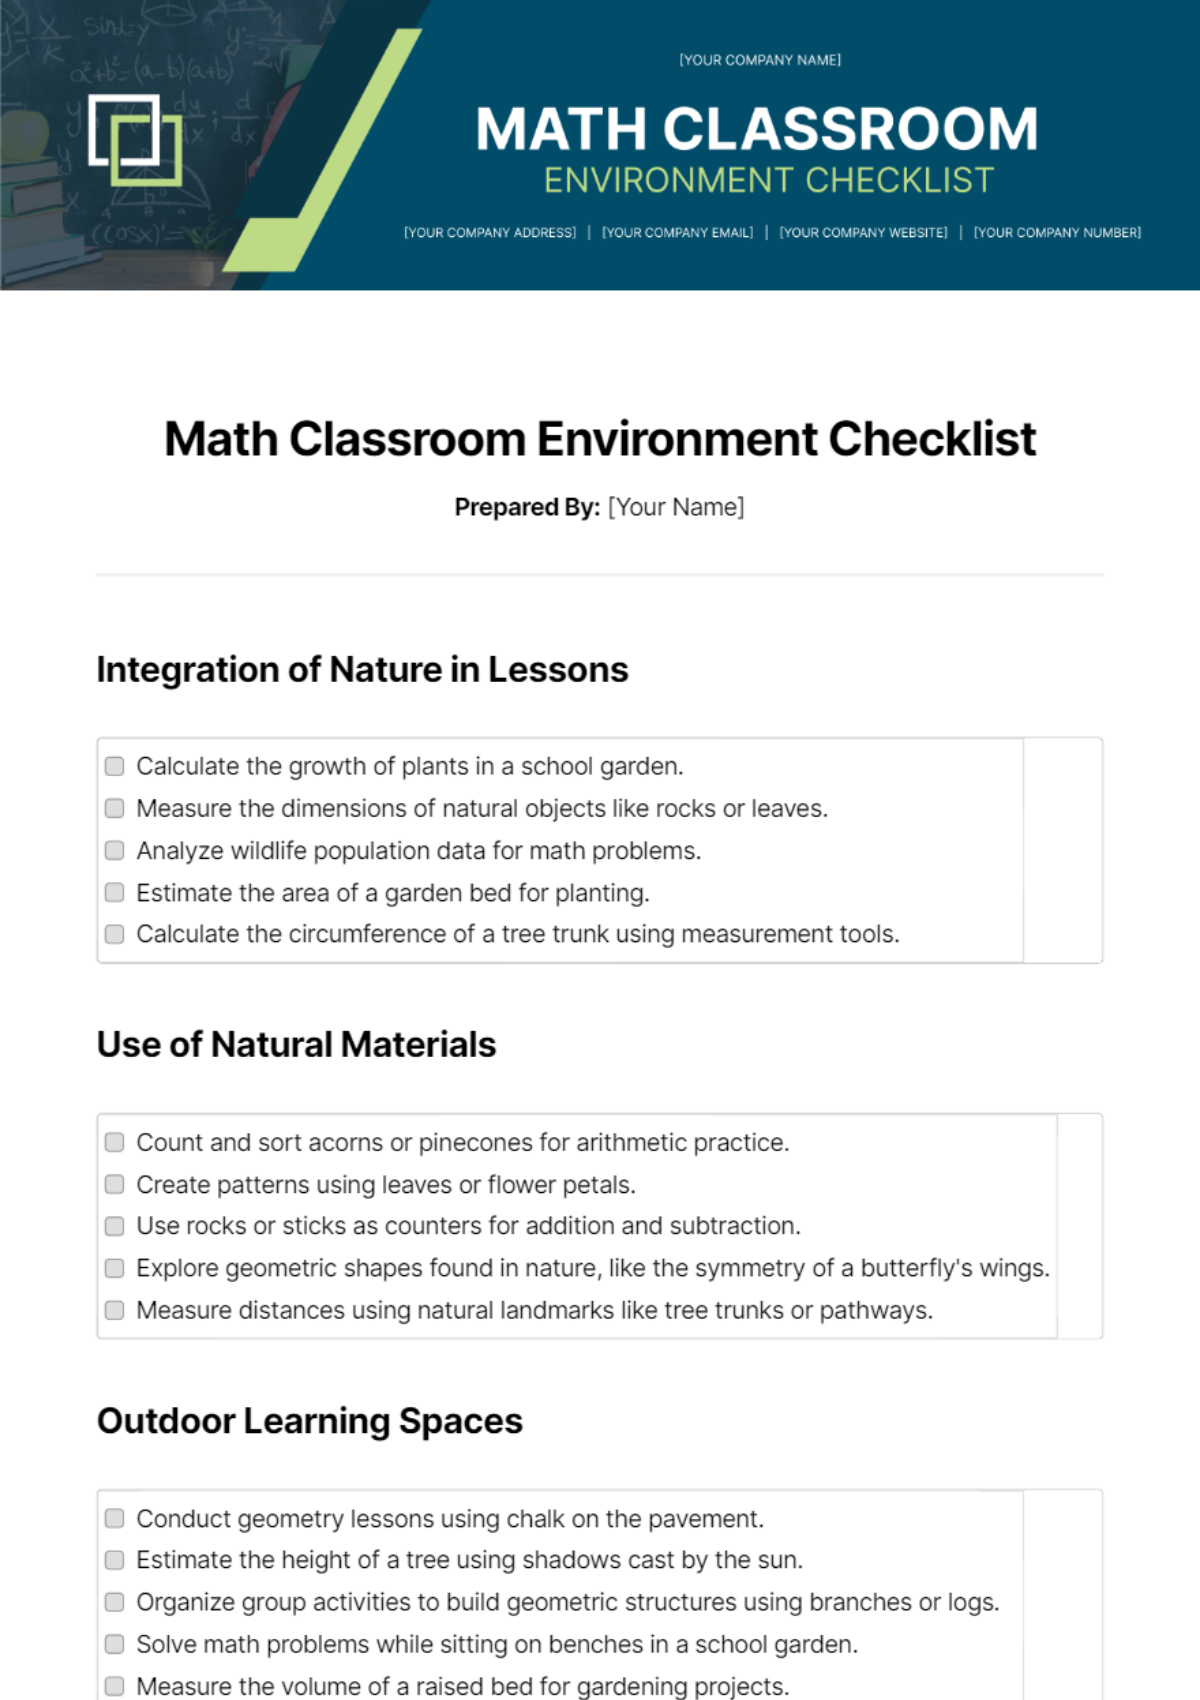 Free Math Classroom Environment Checklist Template